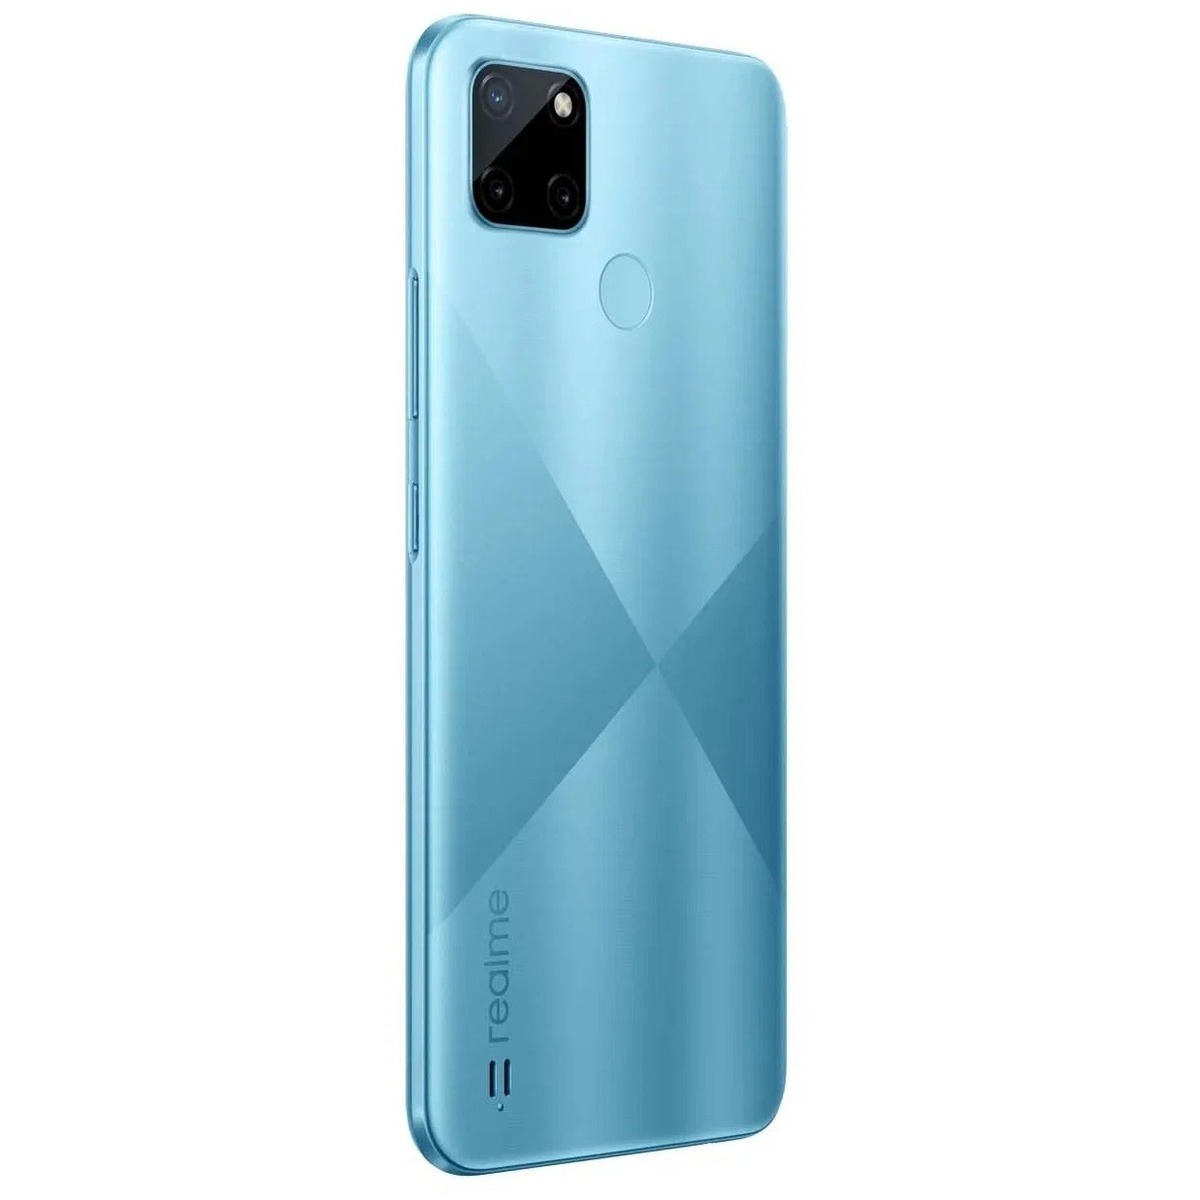 Смартфон realme C21Y 3/32Gb (NFC) (Цвет: Cross Blue)